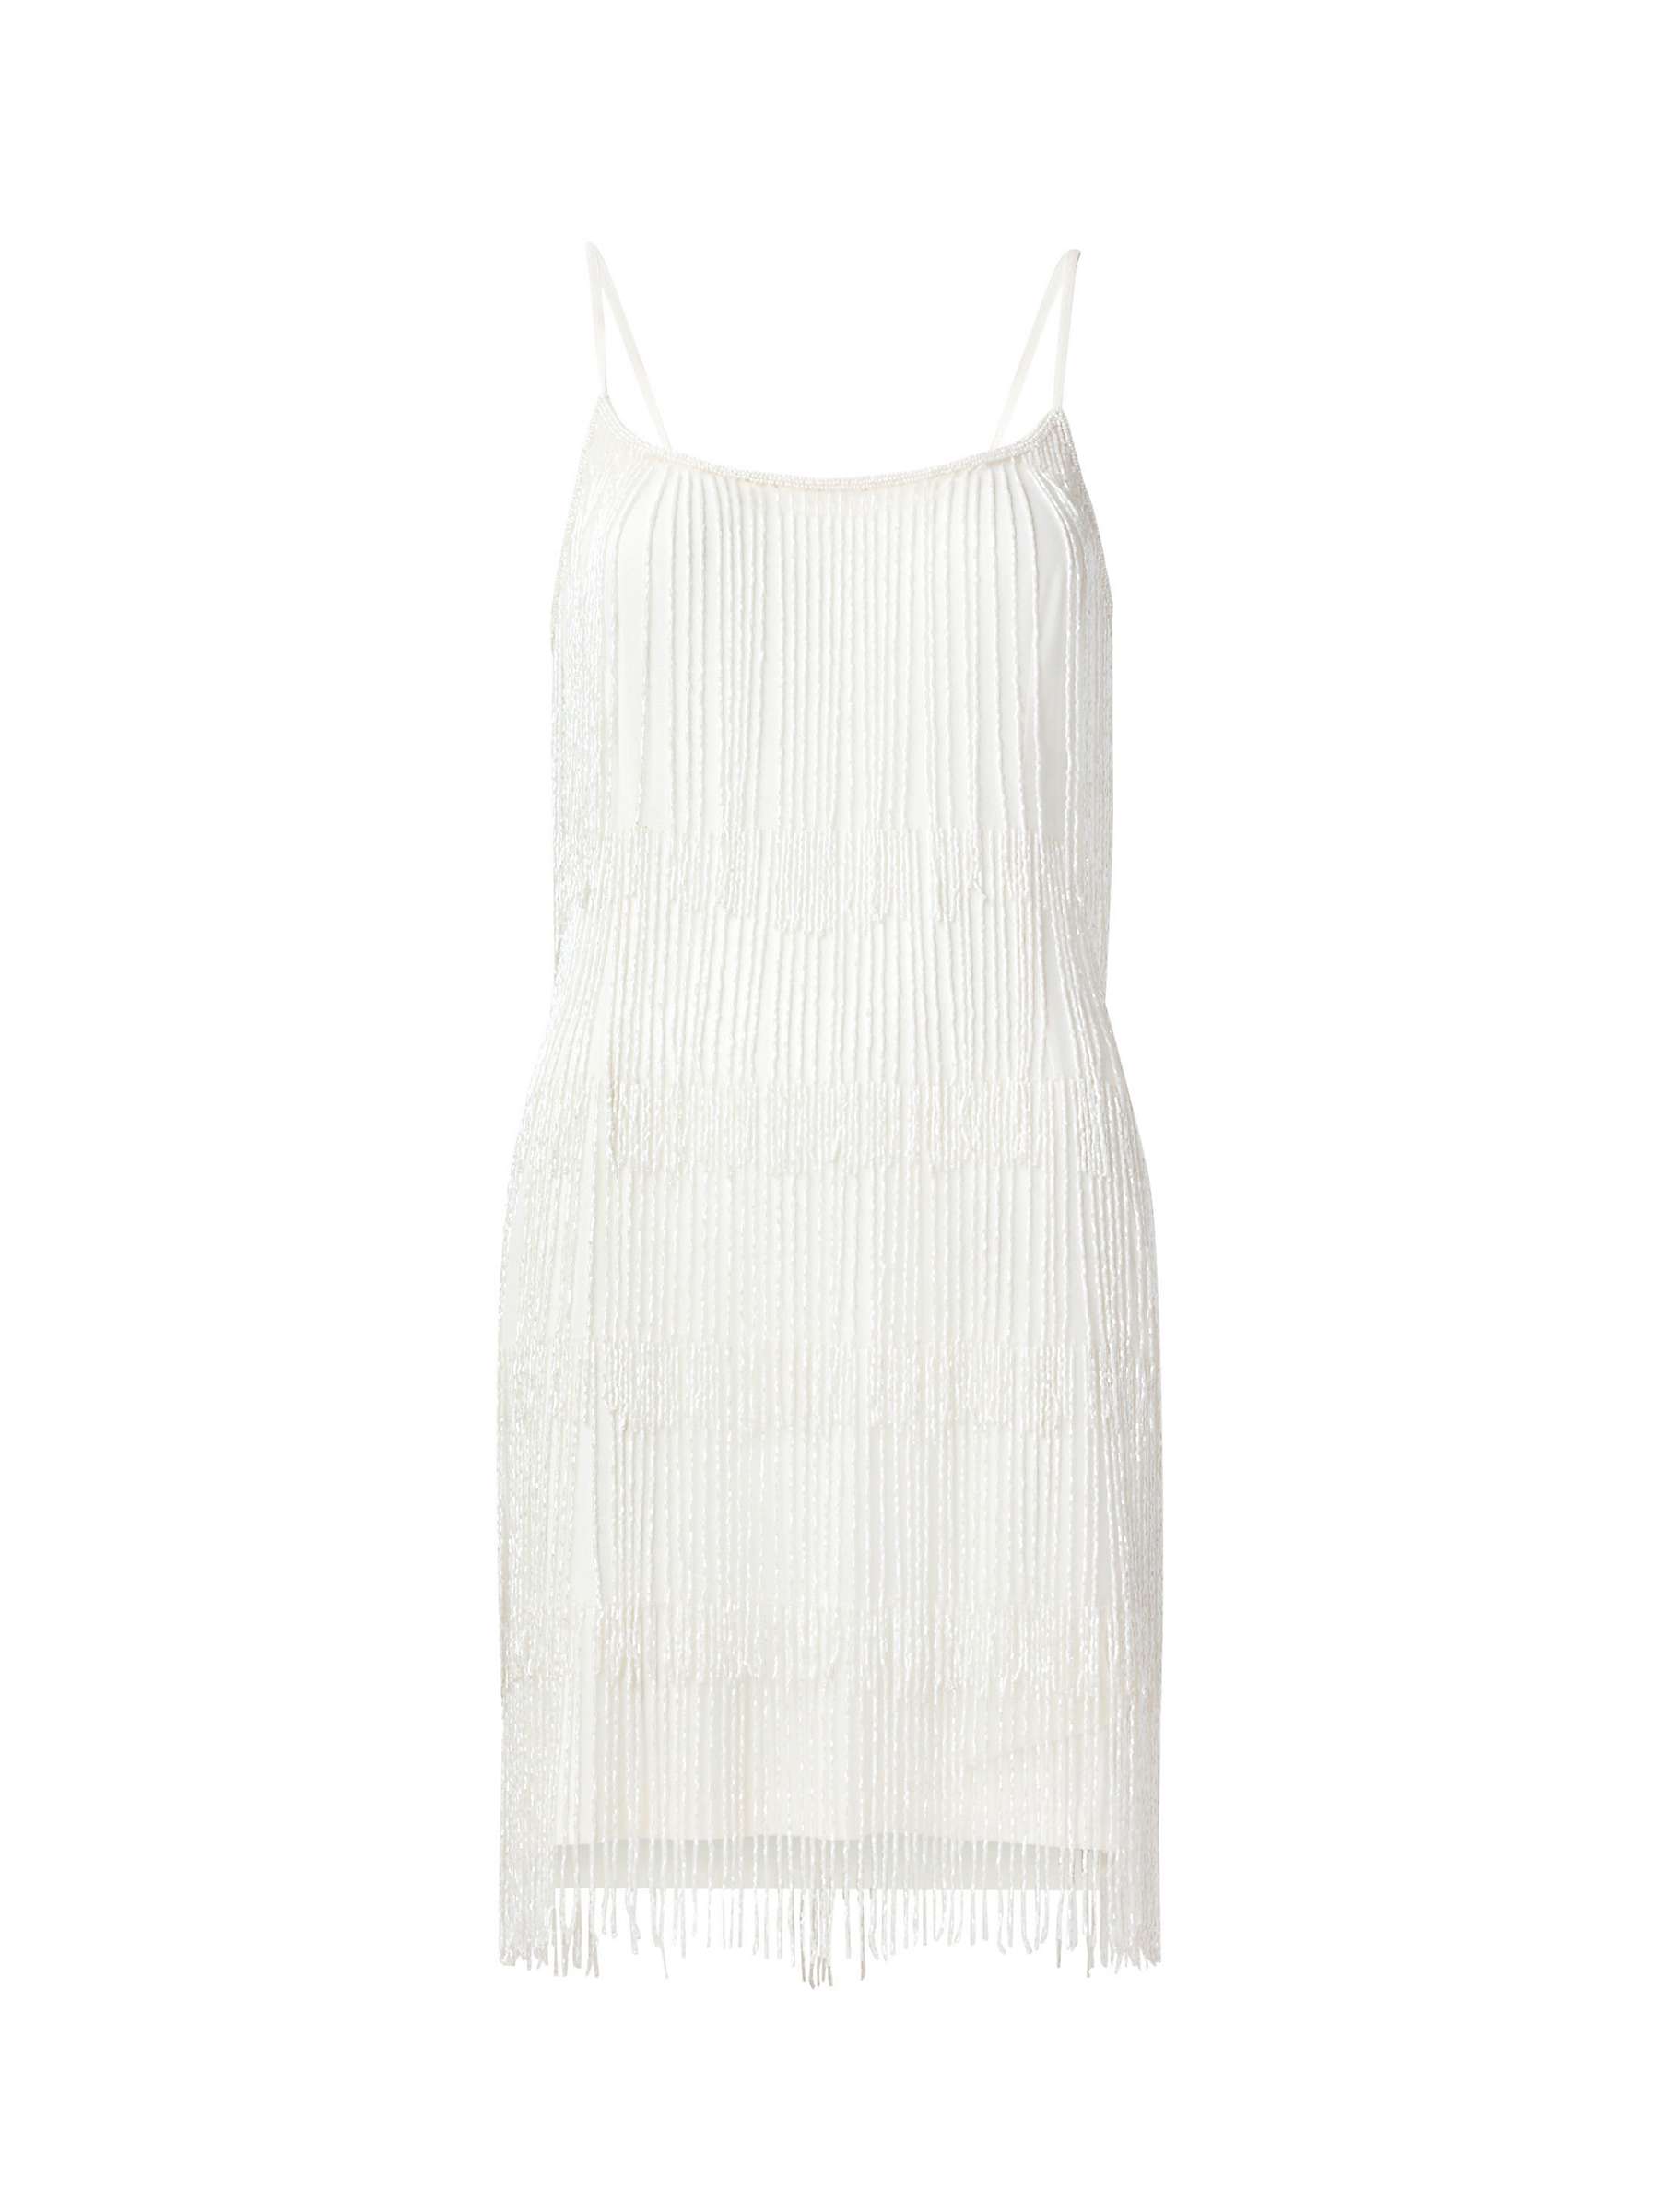 Adrianna Papell Beaded Fringe Mini Dress, Ivory at John Lewis & Partners